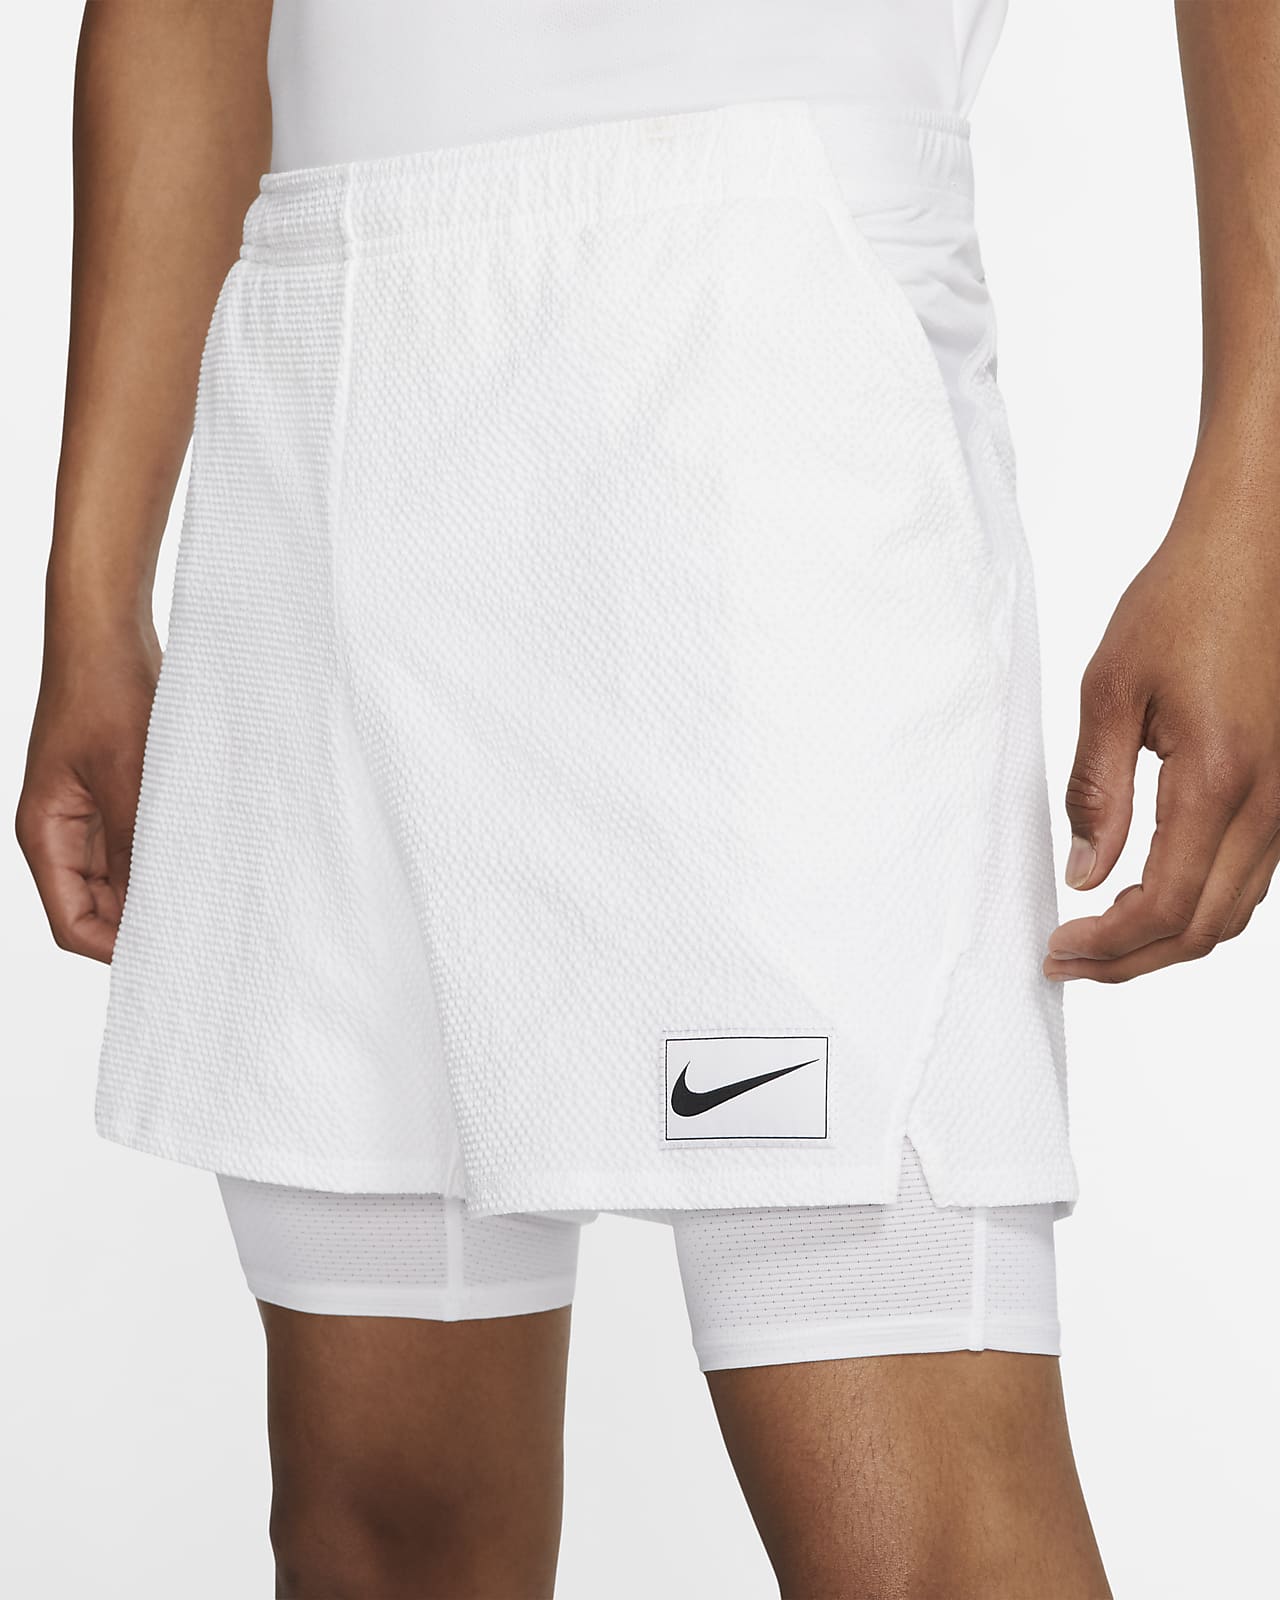 nike 2 in 1 tennis shorts